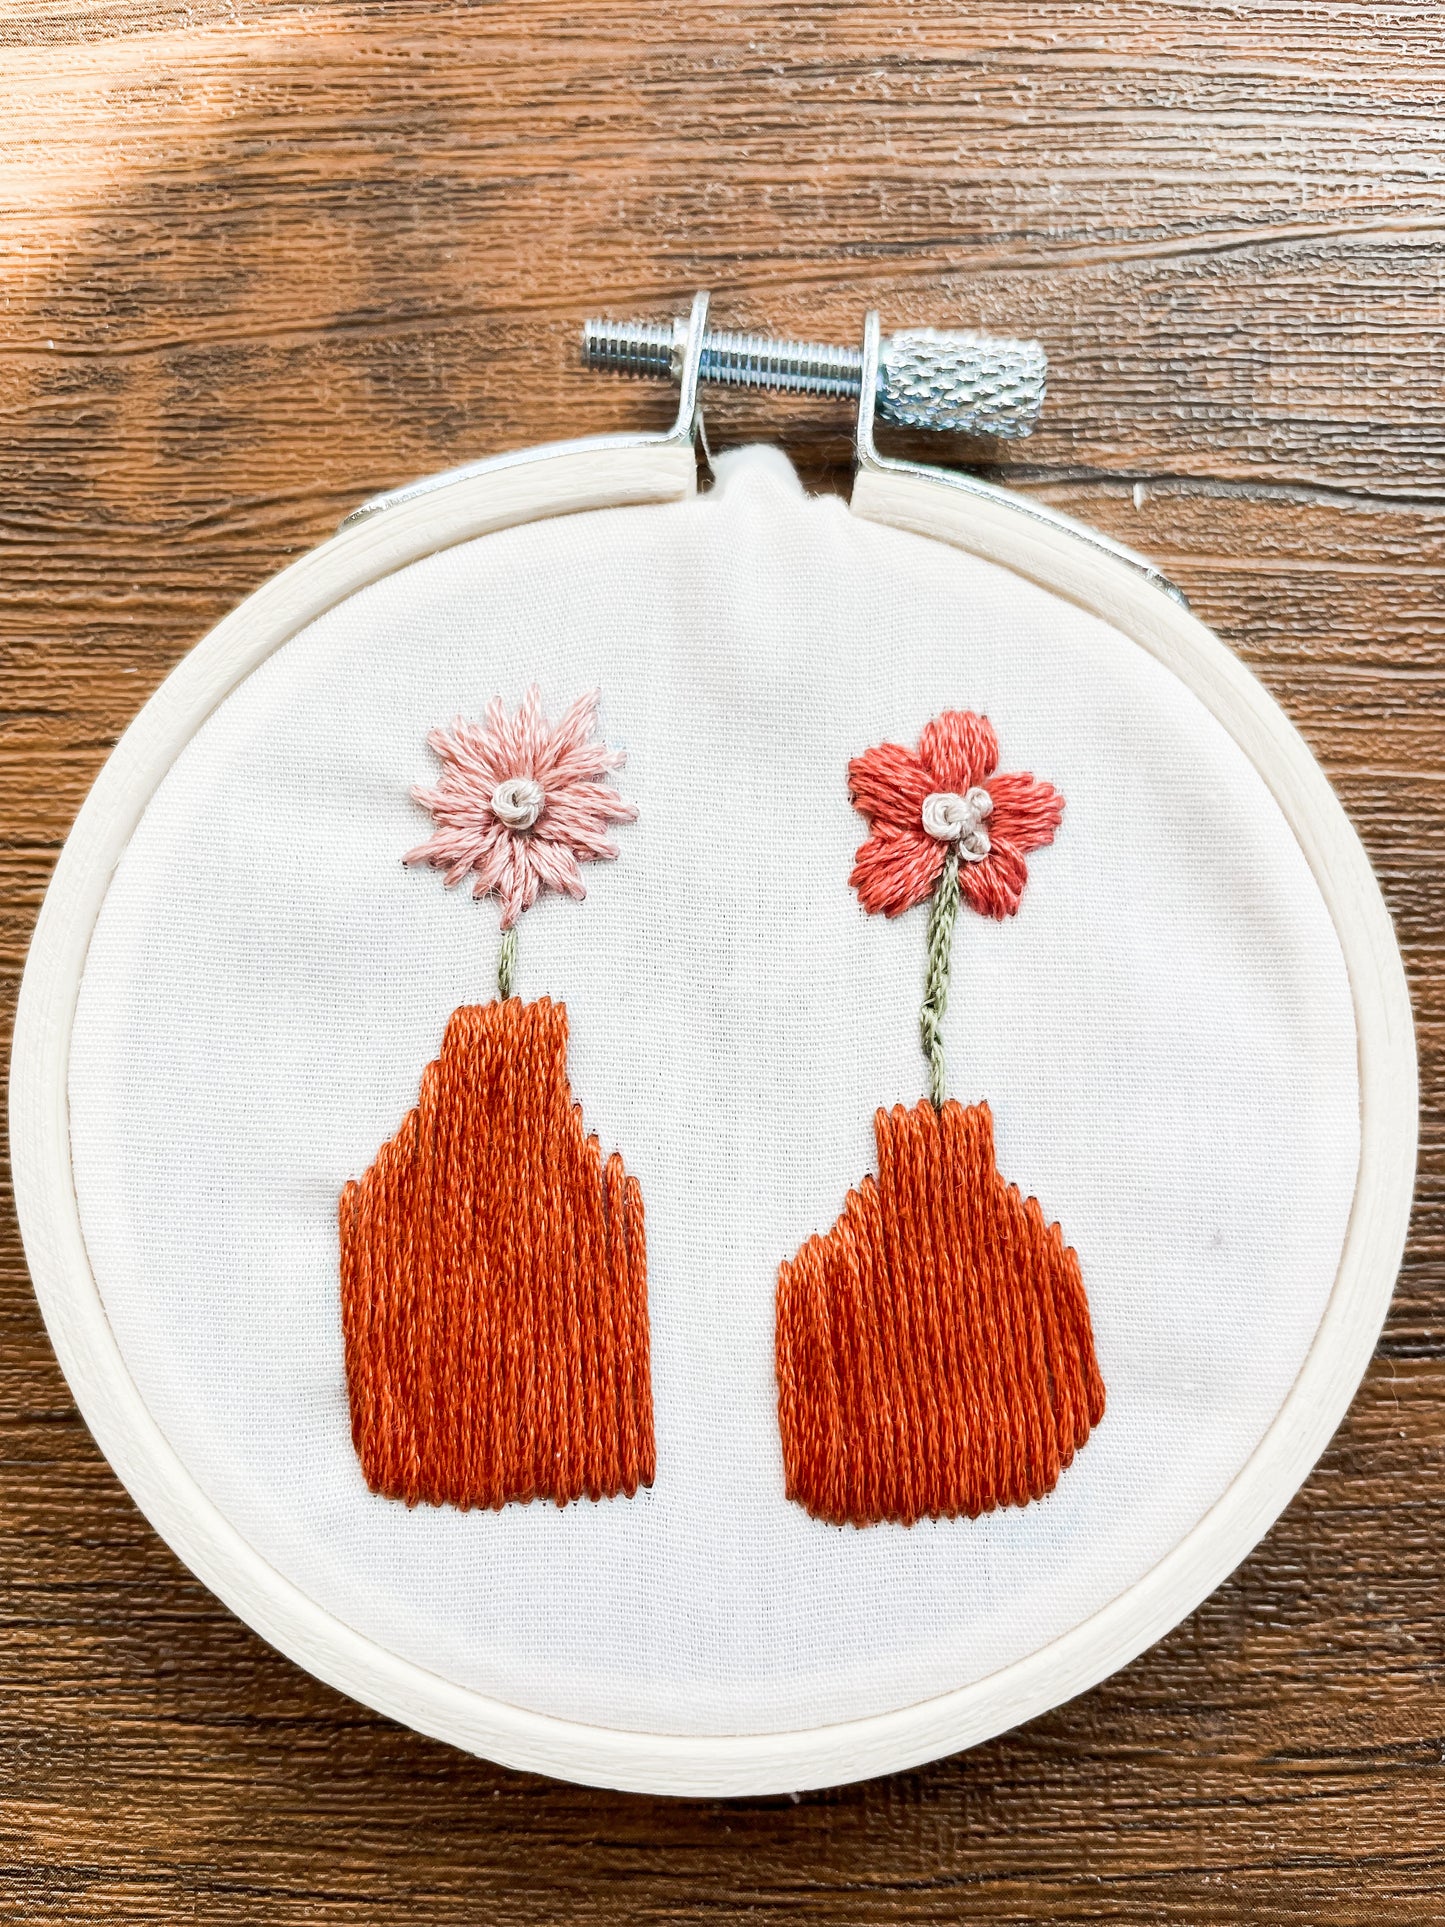 Mini Embroidery Kits